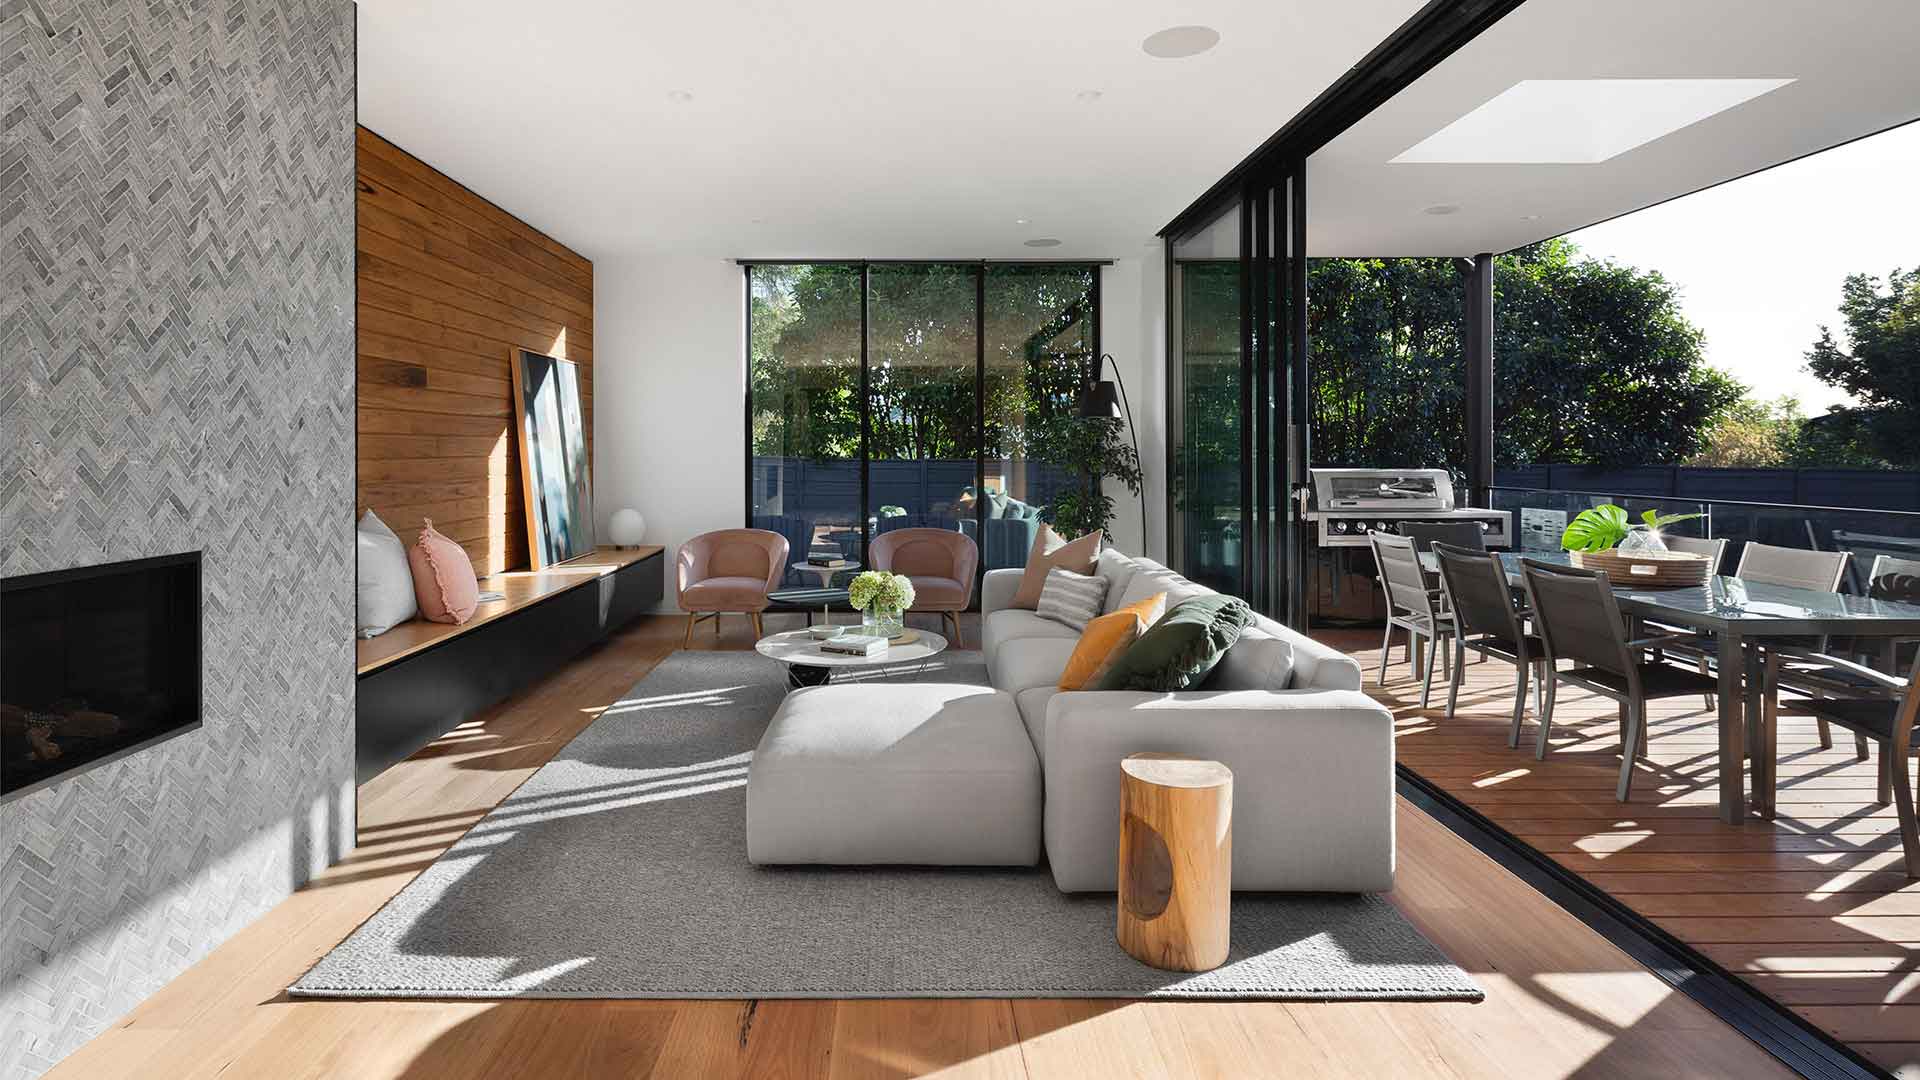 Kiwi Design House – Welcome to Kiwi Design House, where creativity